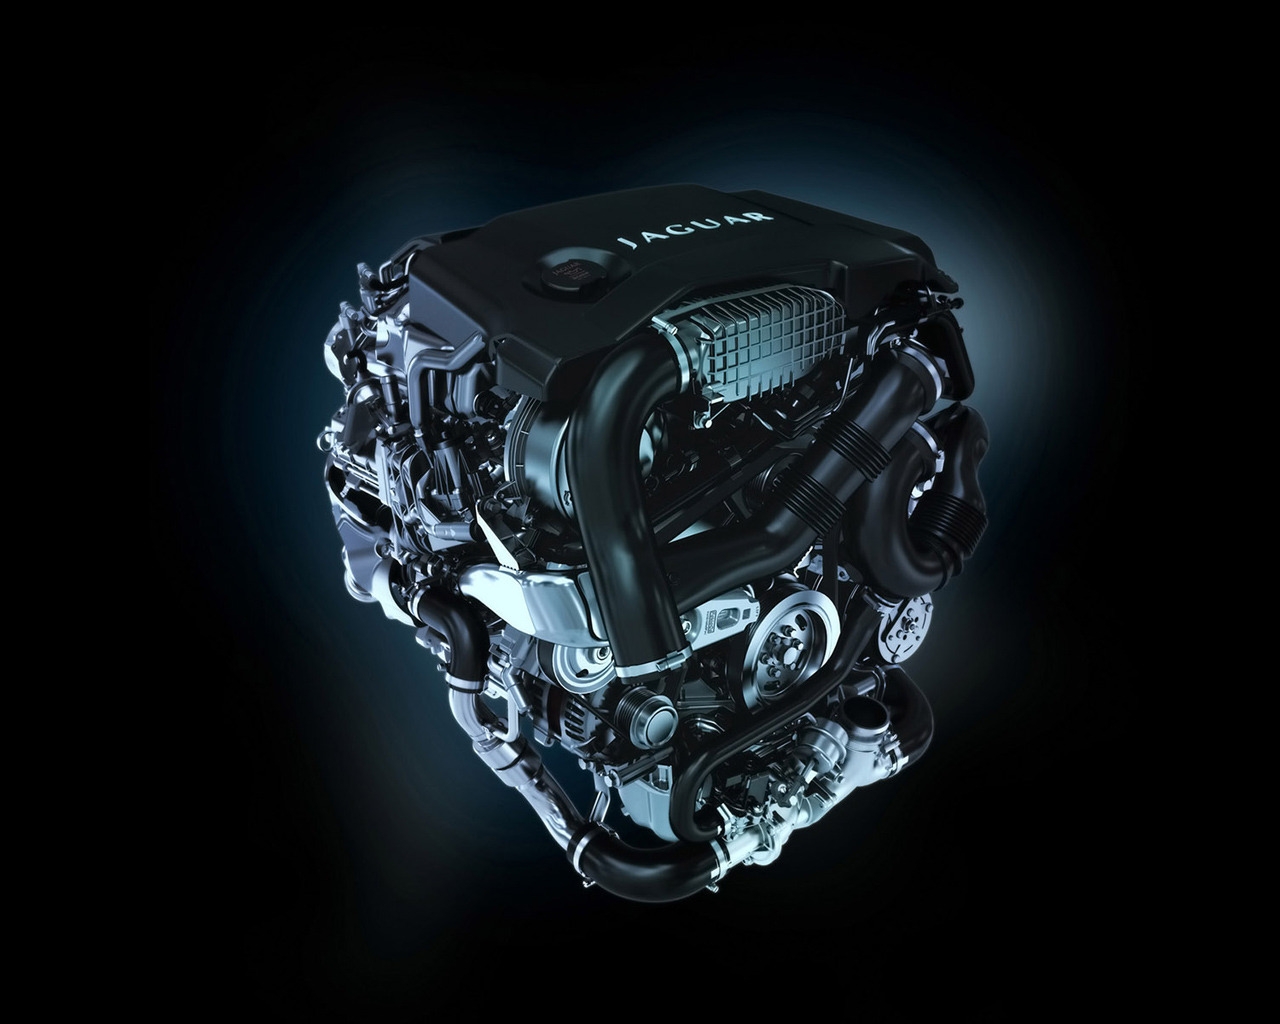 Jaguar XF Diesel S Engine for 1280 x 1024 resolution